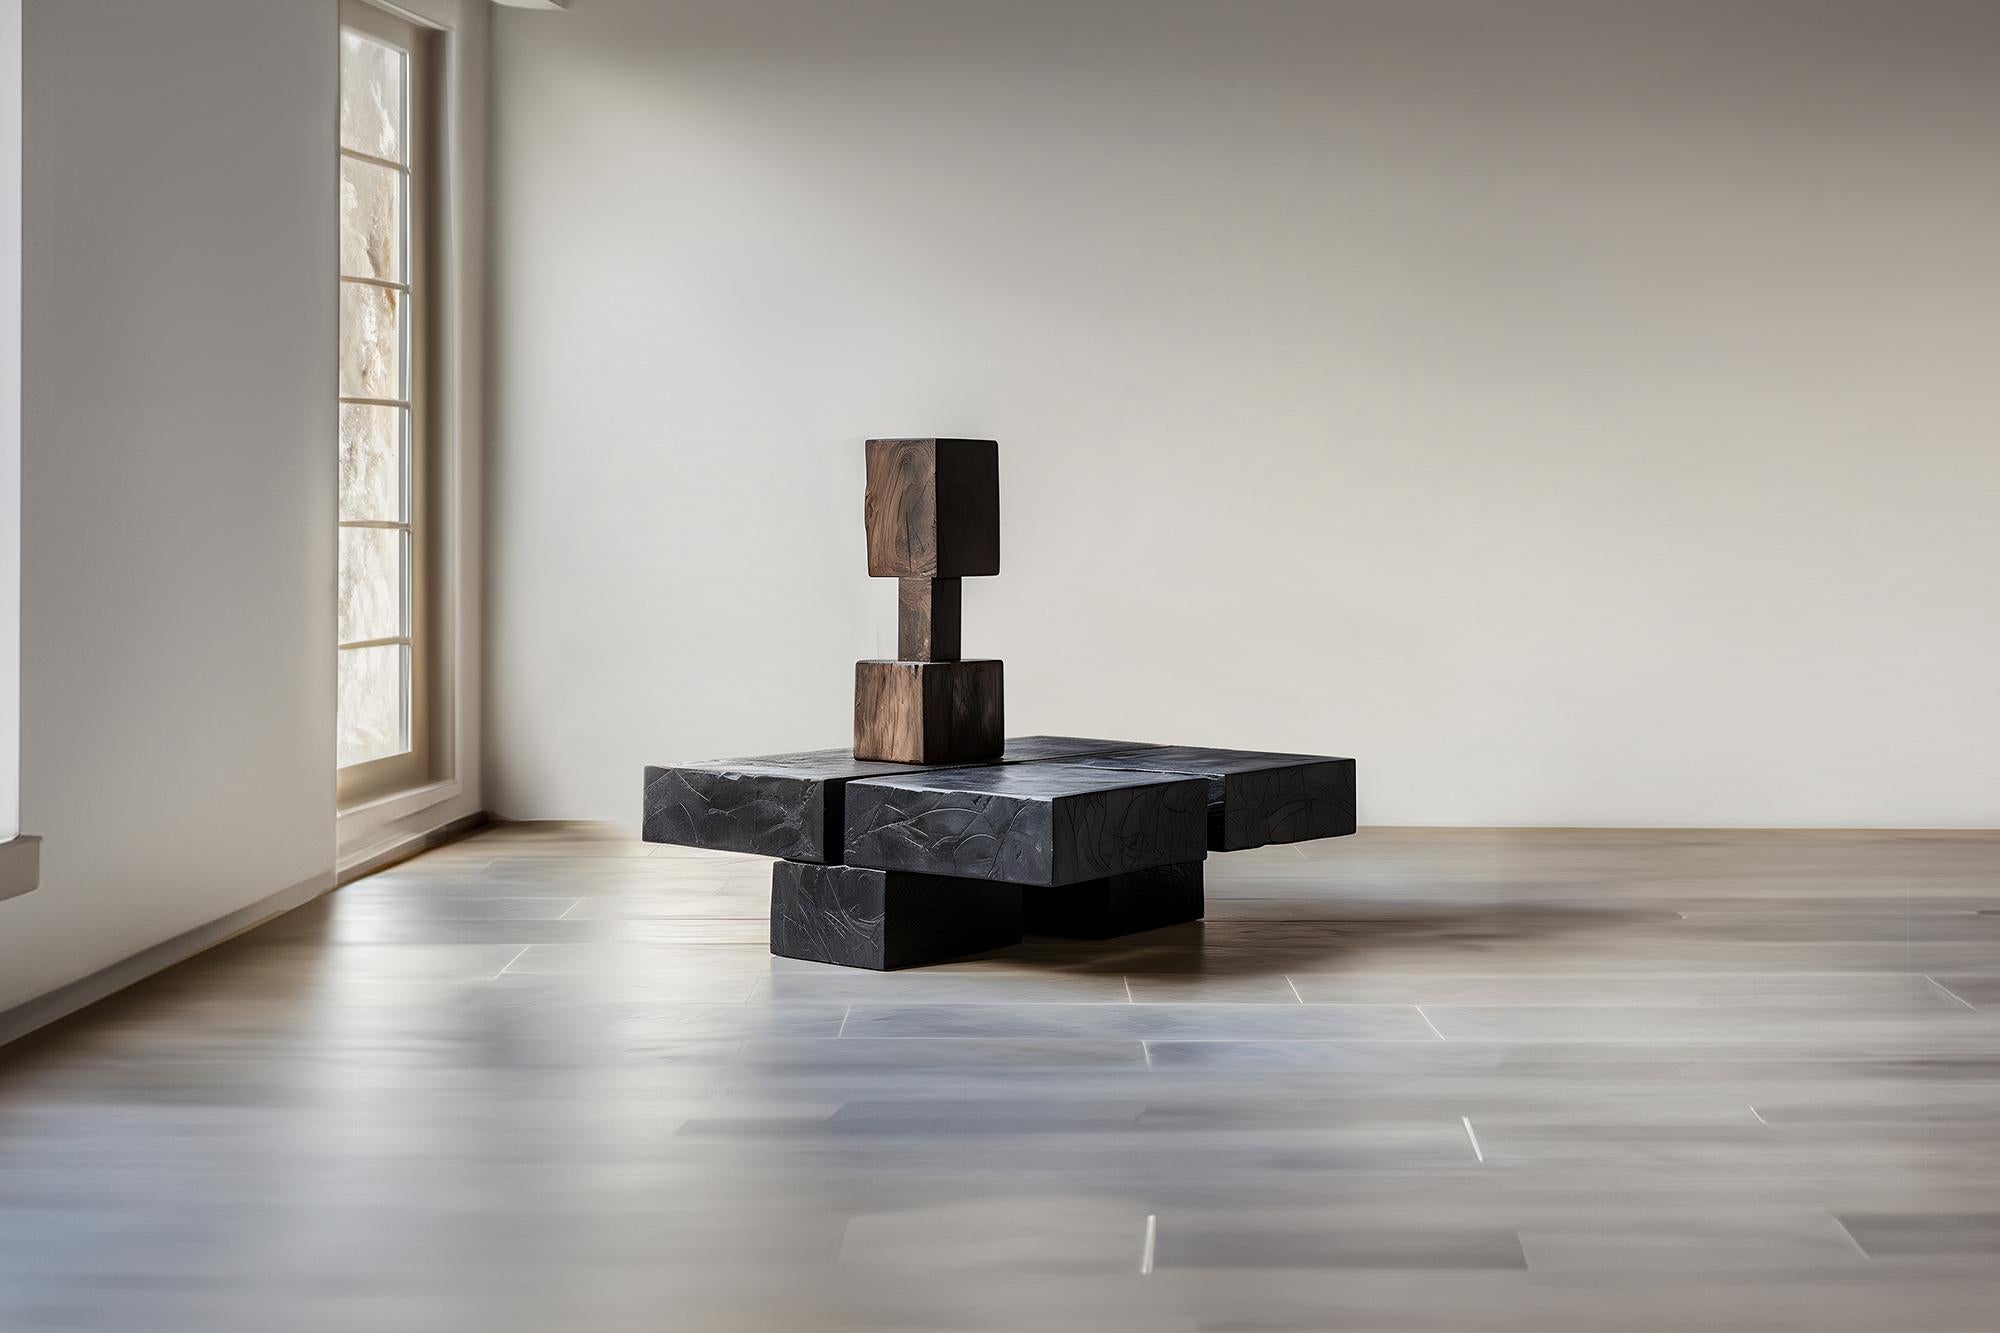 Brutalist Joel Escalona's Unseen Force #57: Solid Oak Table, Sculptural Presence For Sale